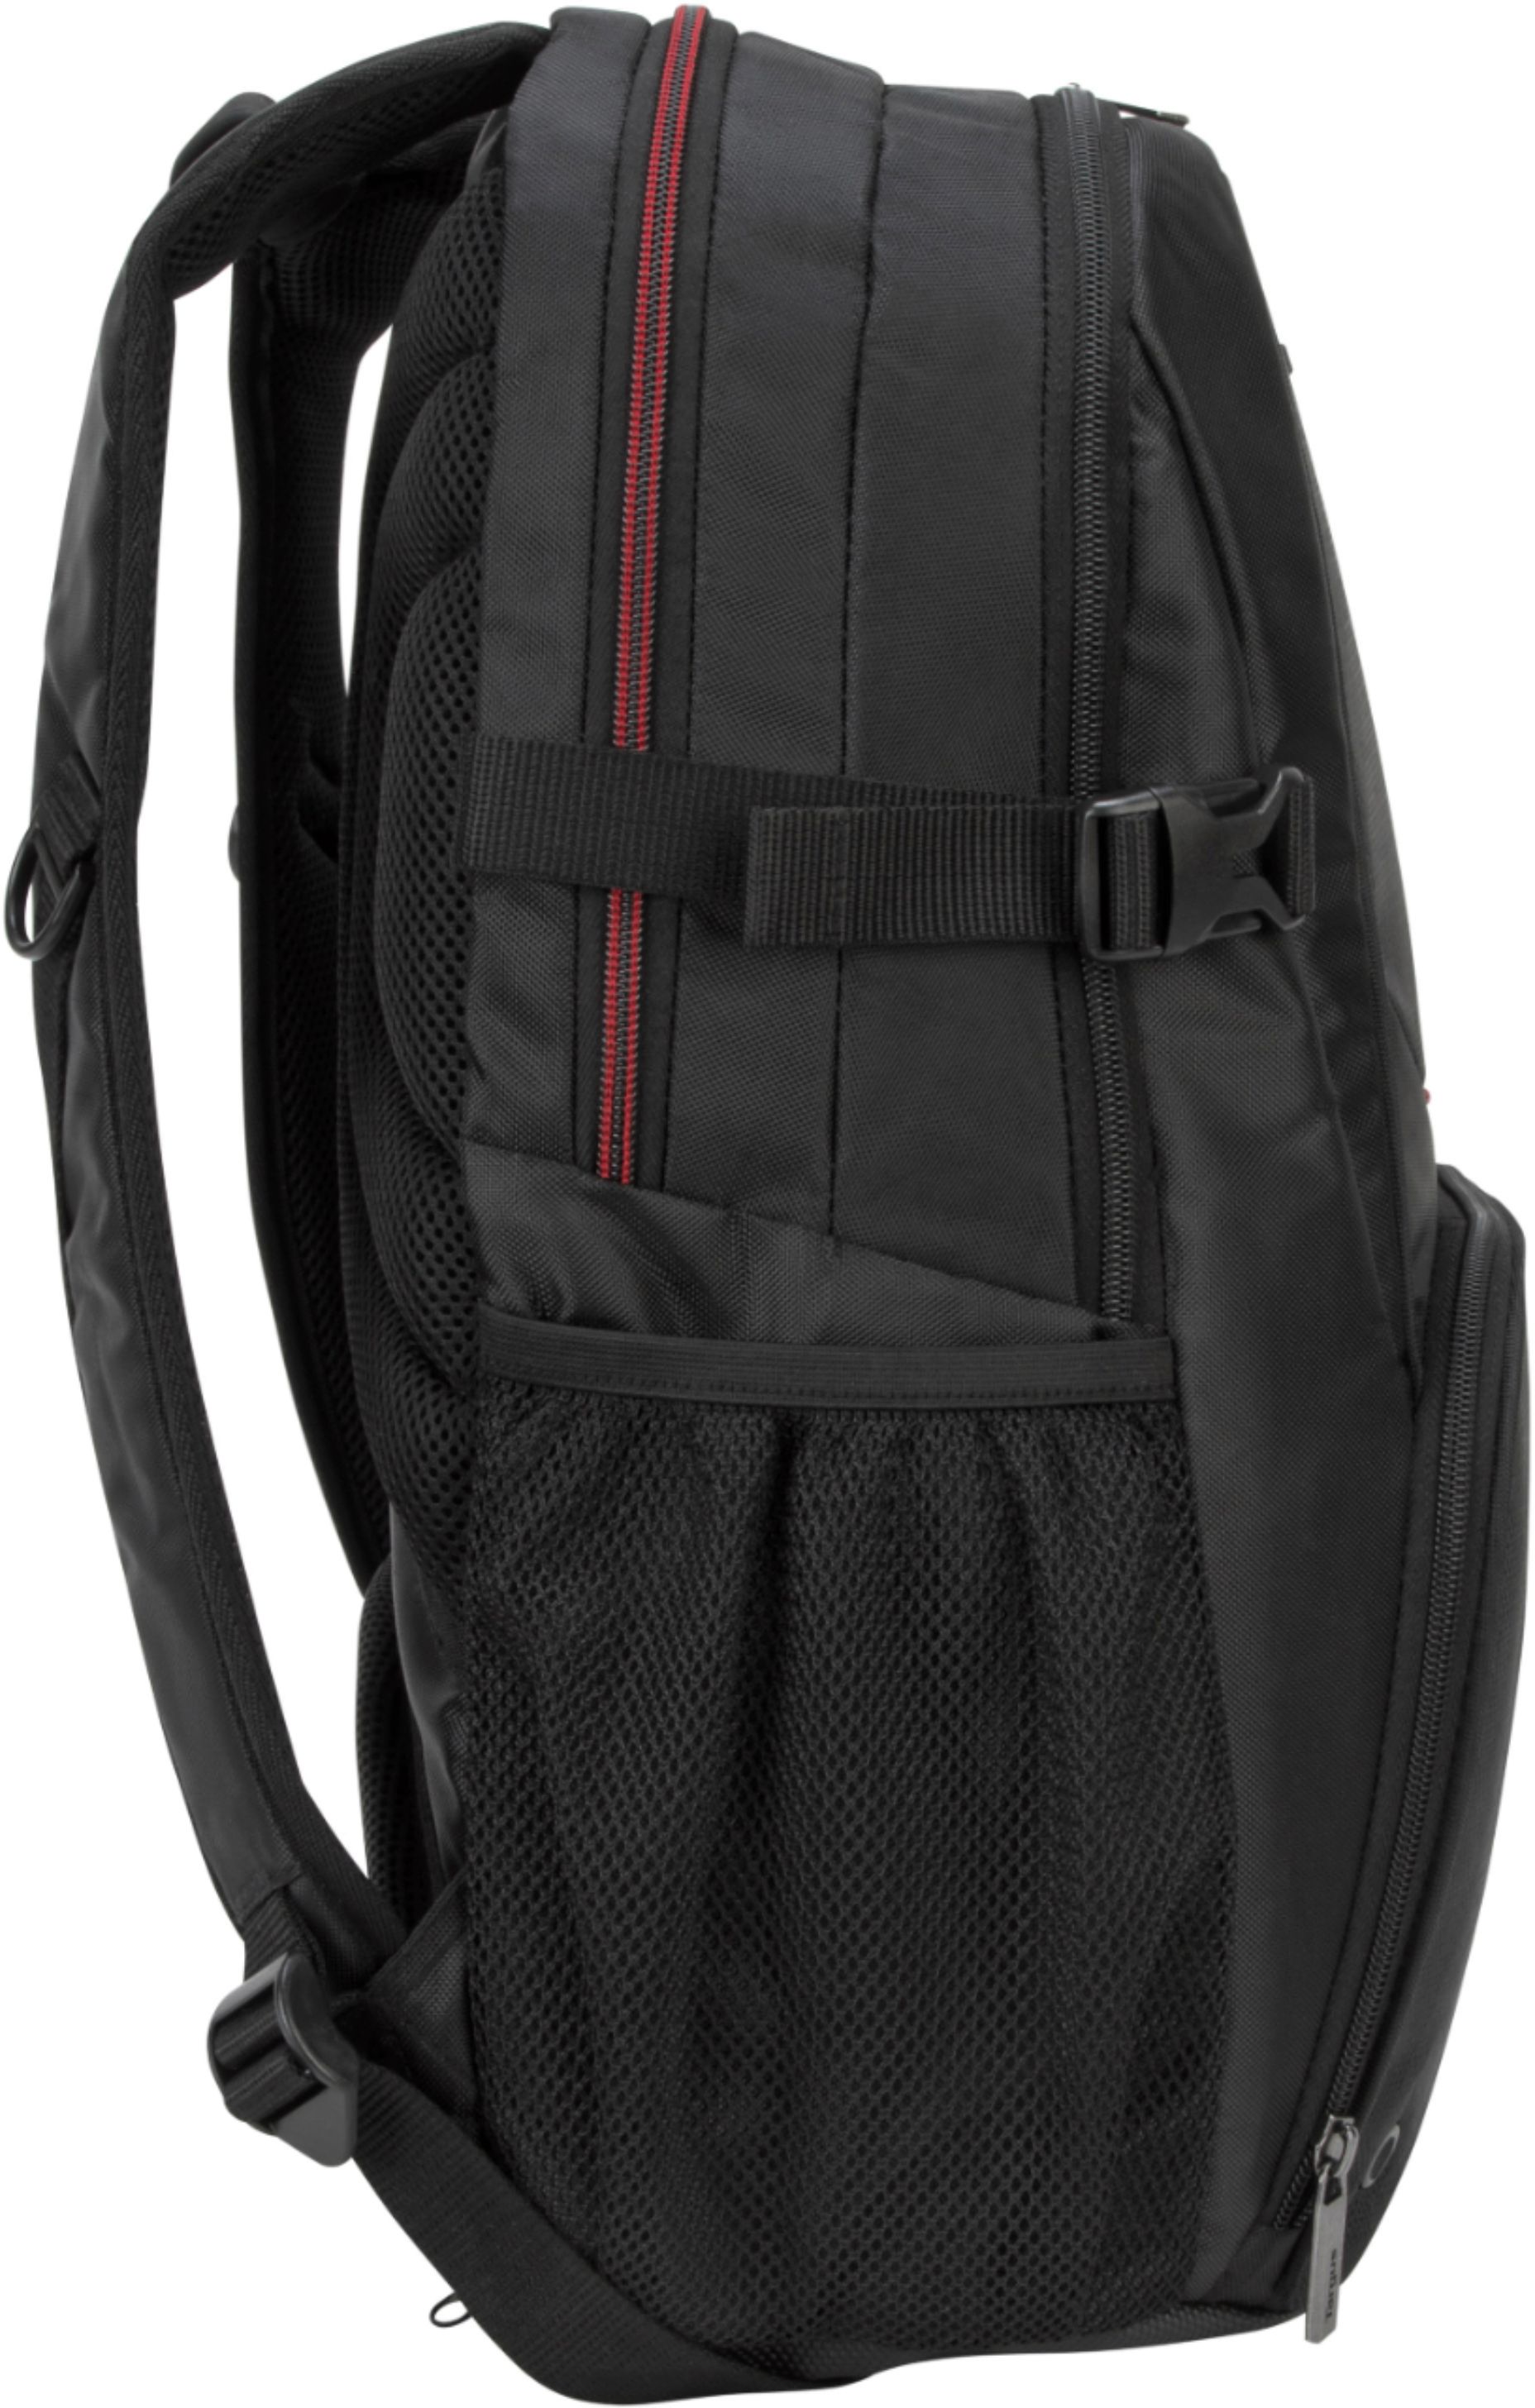 Customer Reviews: Targus Metropolitan Laptop Backpack Black TSB917US ...